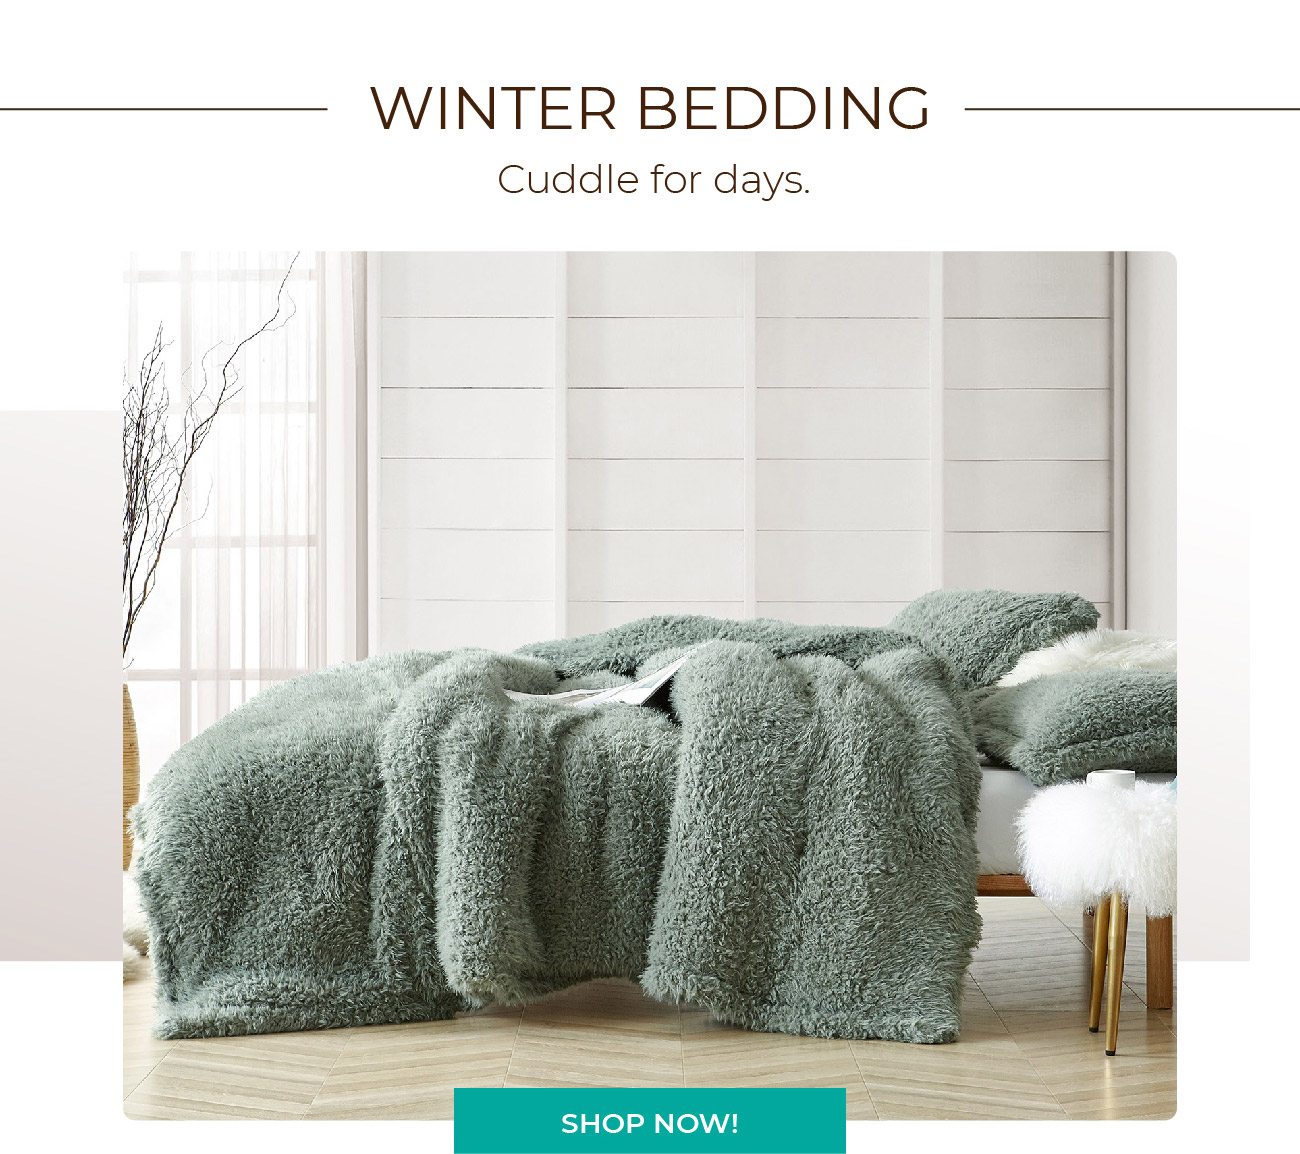 Winter Bedding